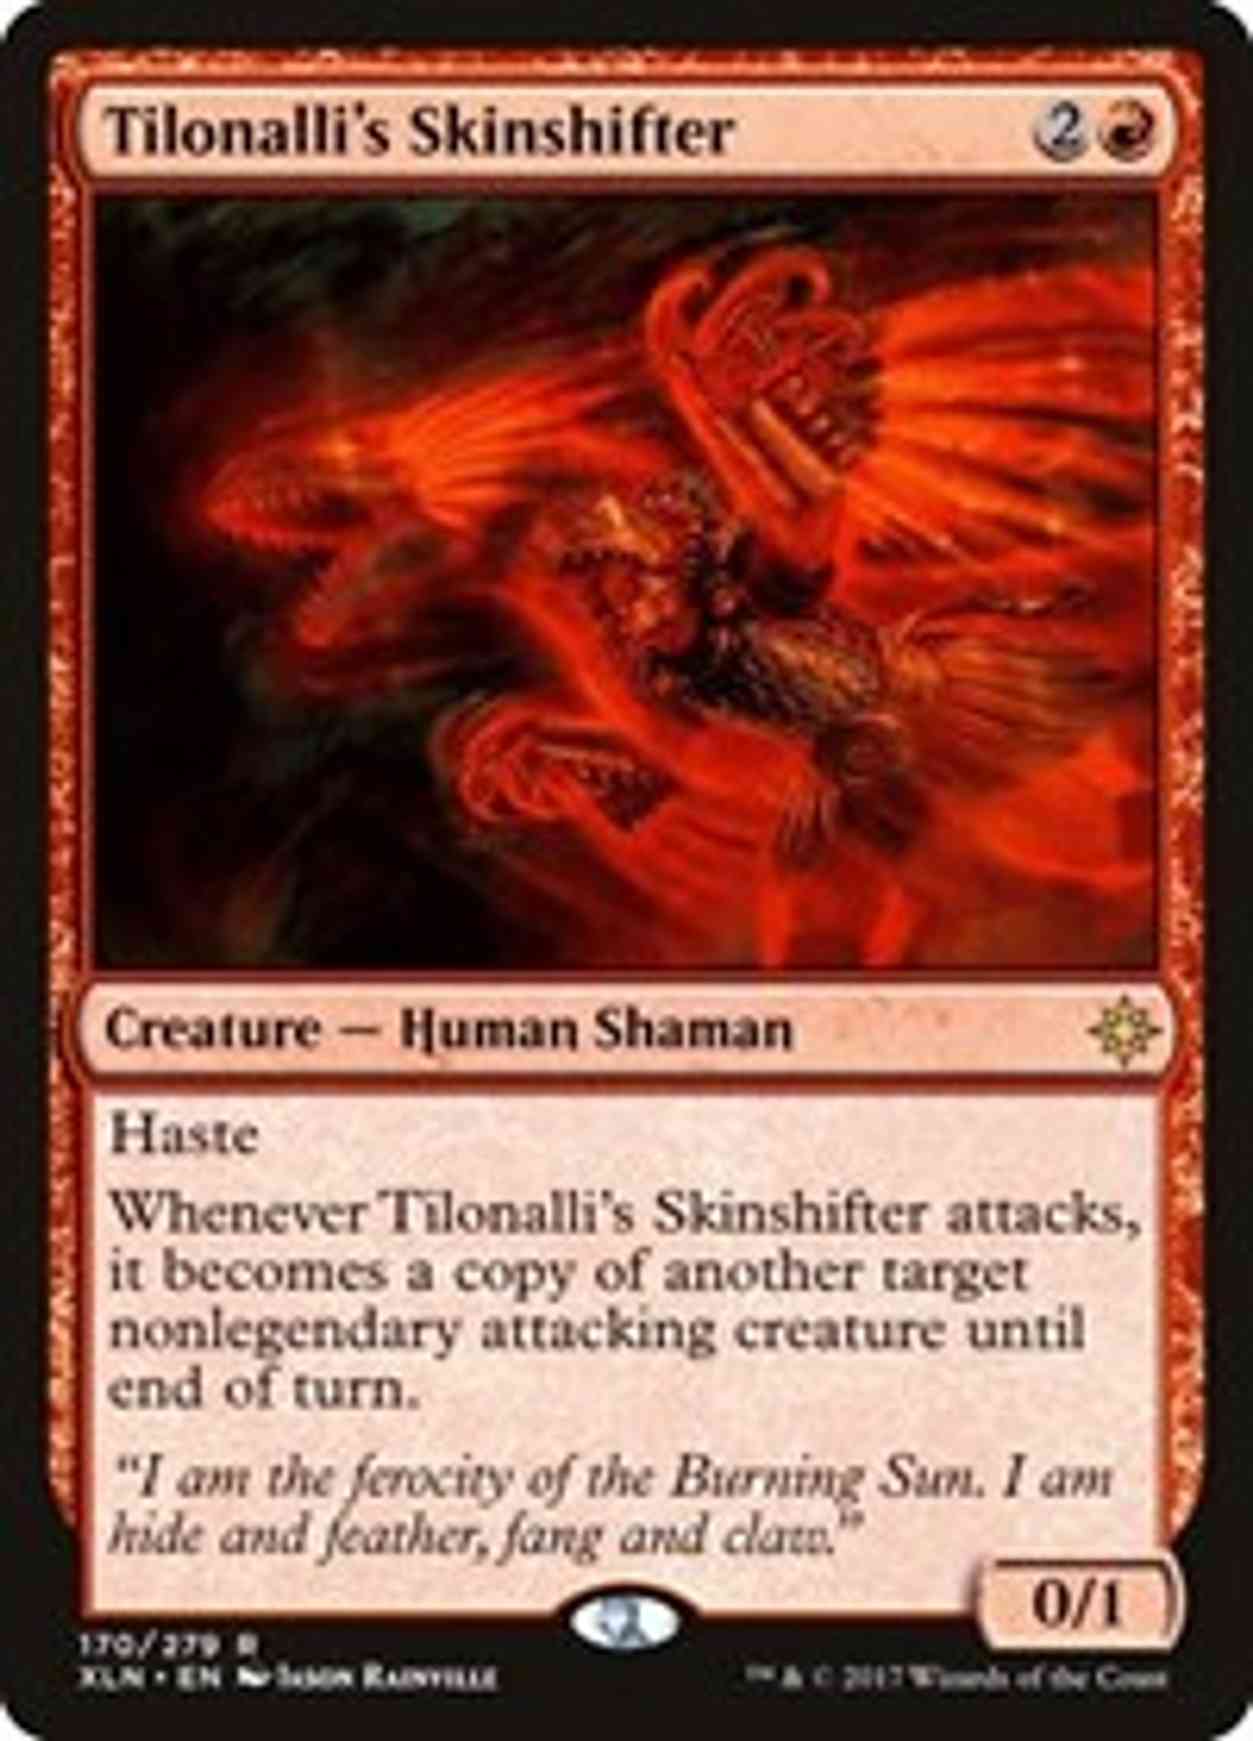 Tilonalli's Skinshifter magic card front